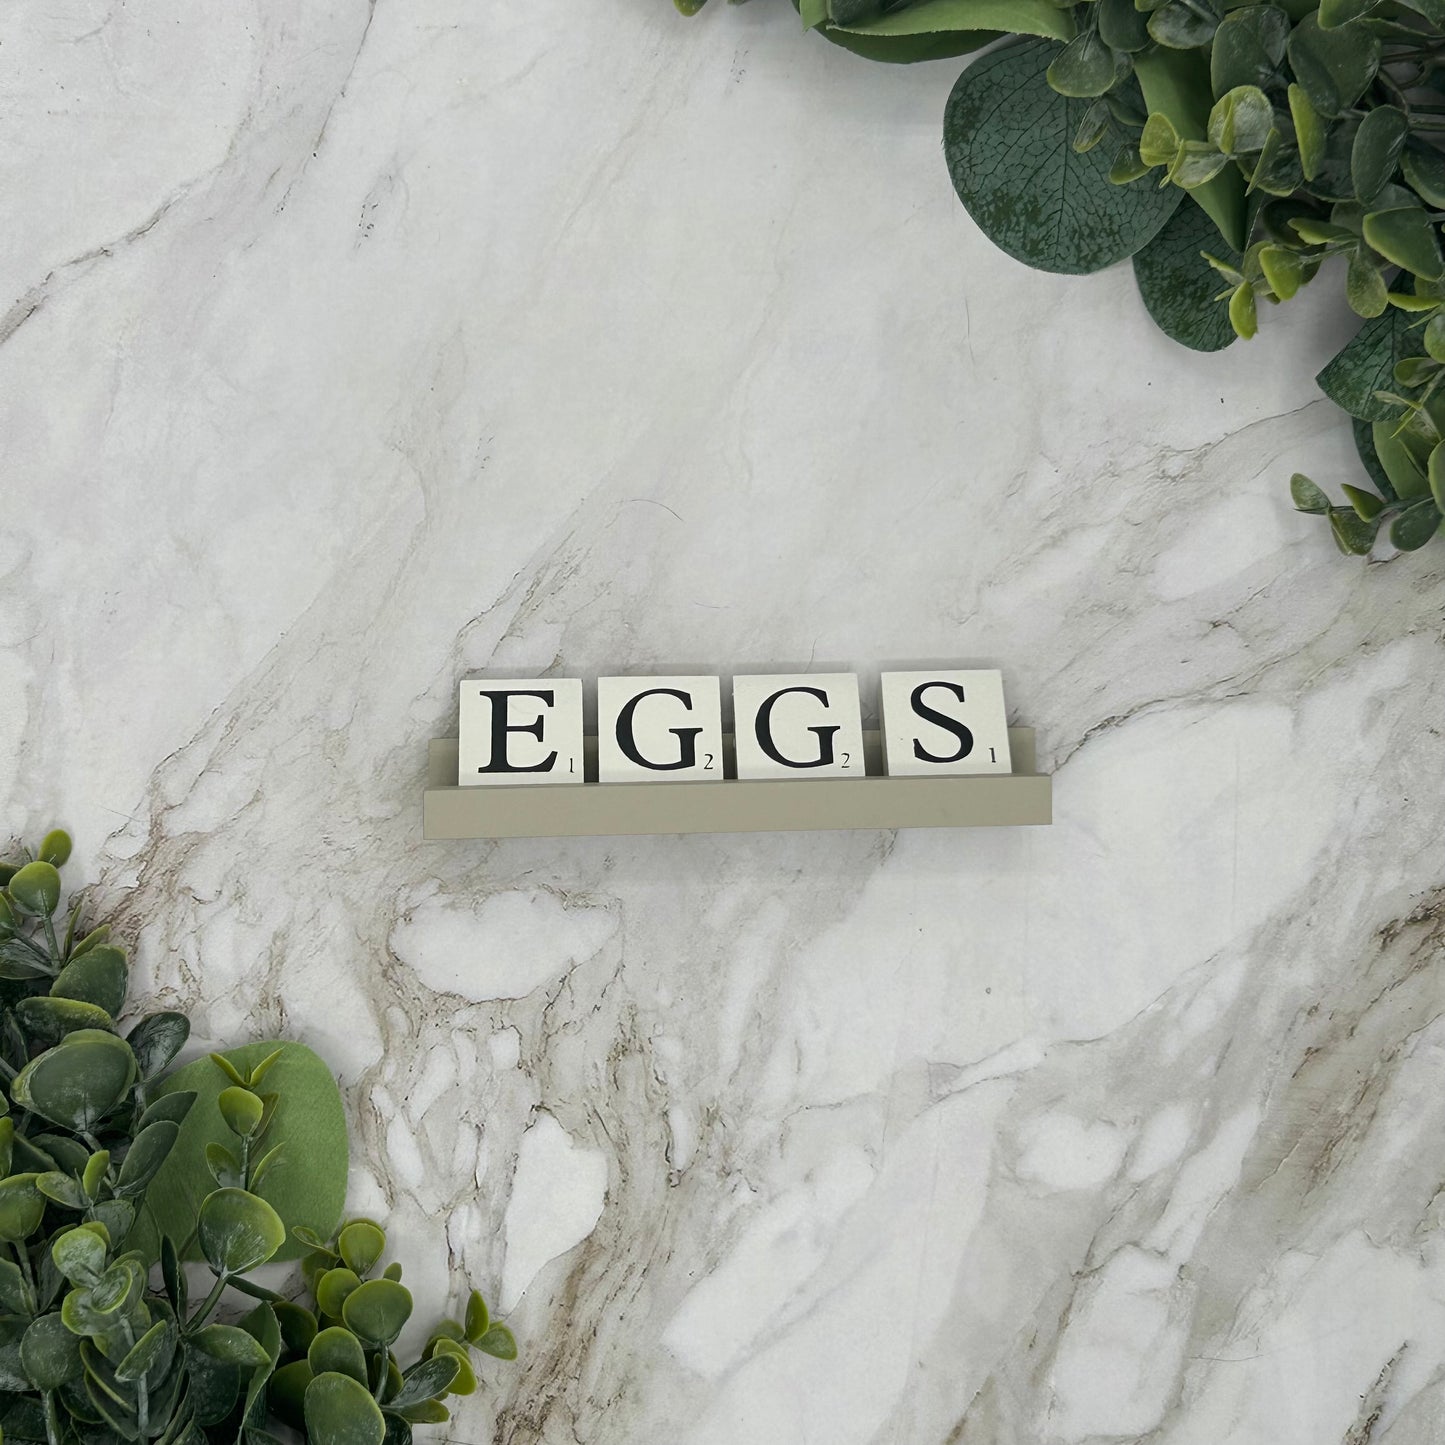 EGGS Scrabble Tiles